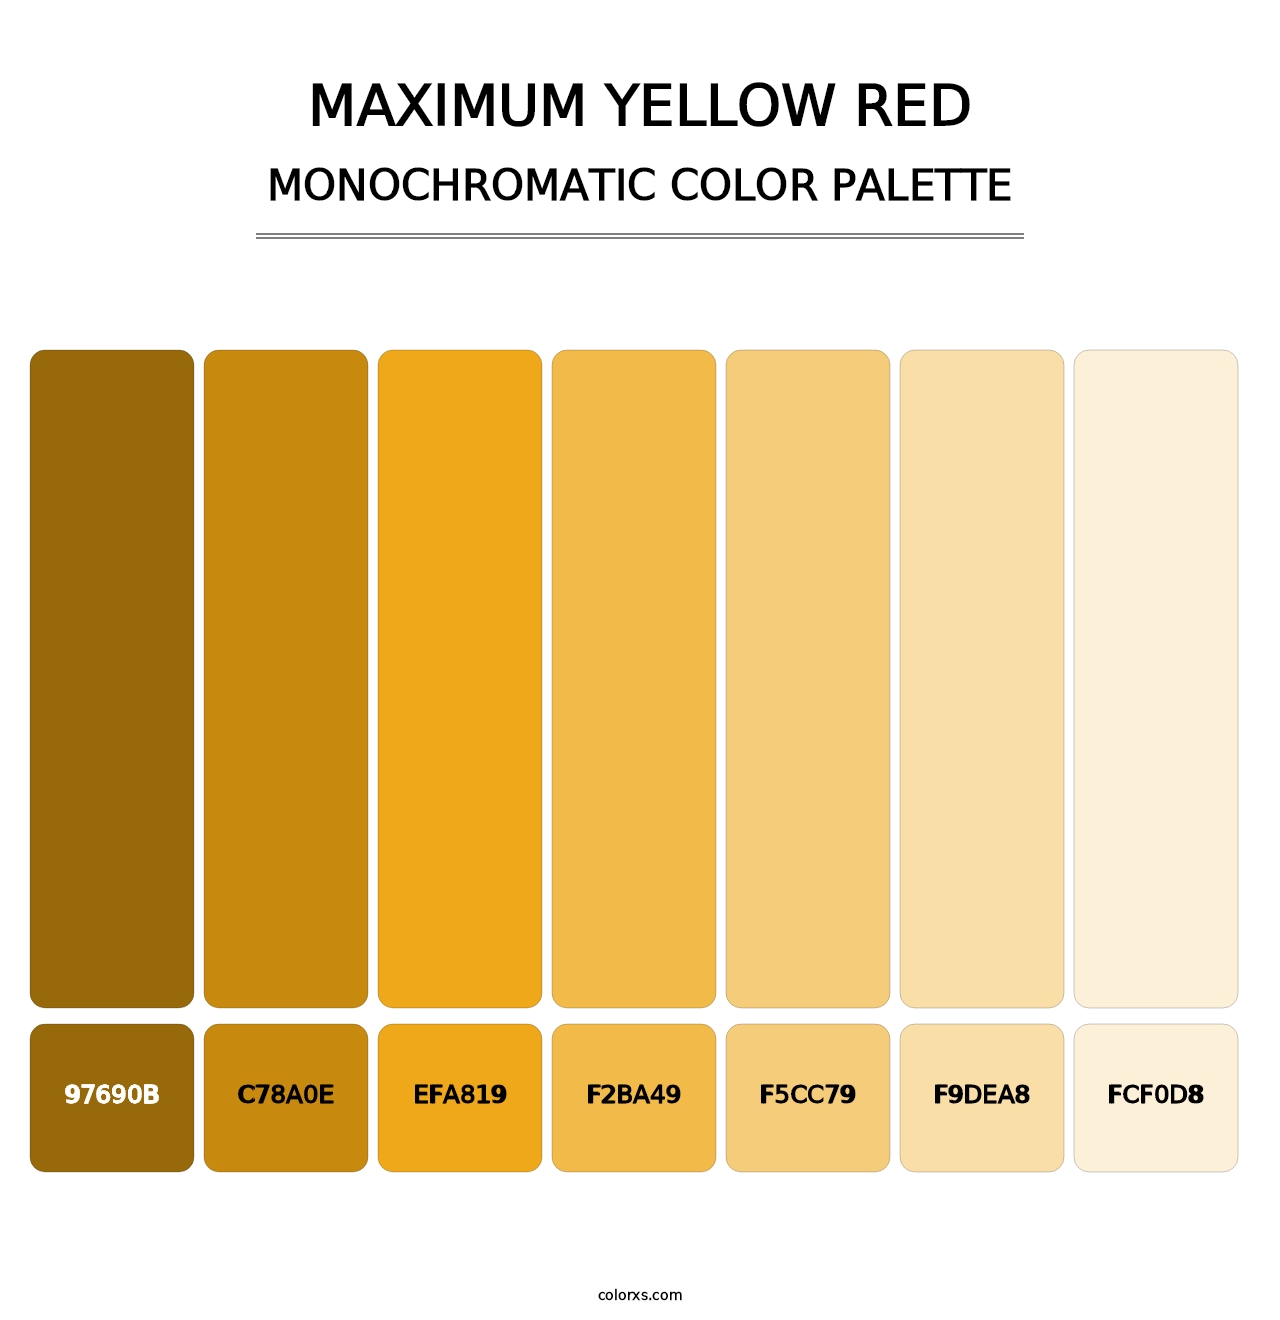 Maximum Yellow Red - Monochromatic Color Palette